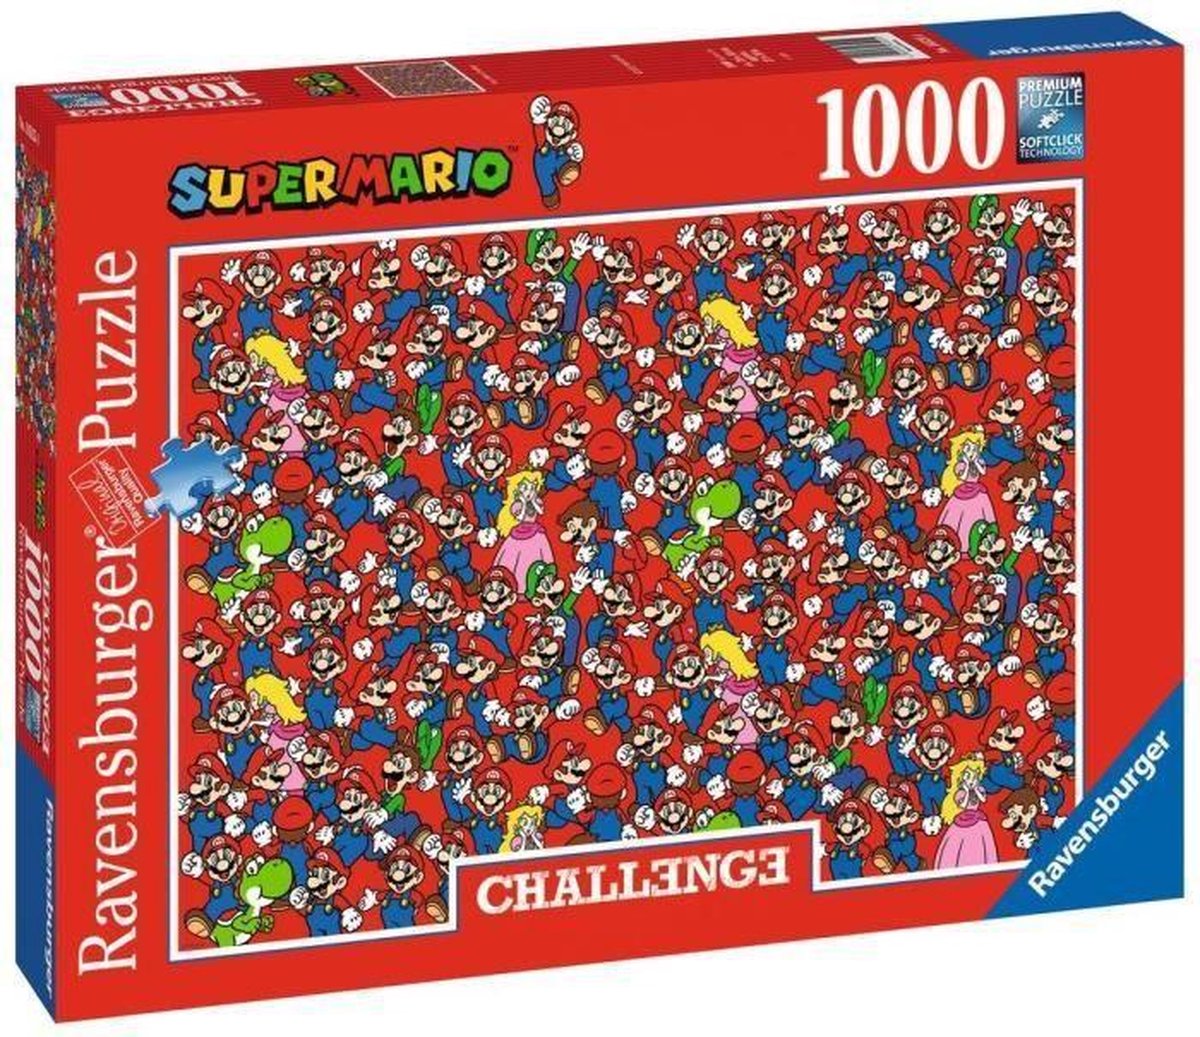 graan Aktentas Aanwezigheid Ravensburger puzzel Super Mario - Legpuzzel - 1000 stukjes Challenge |  bol.com